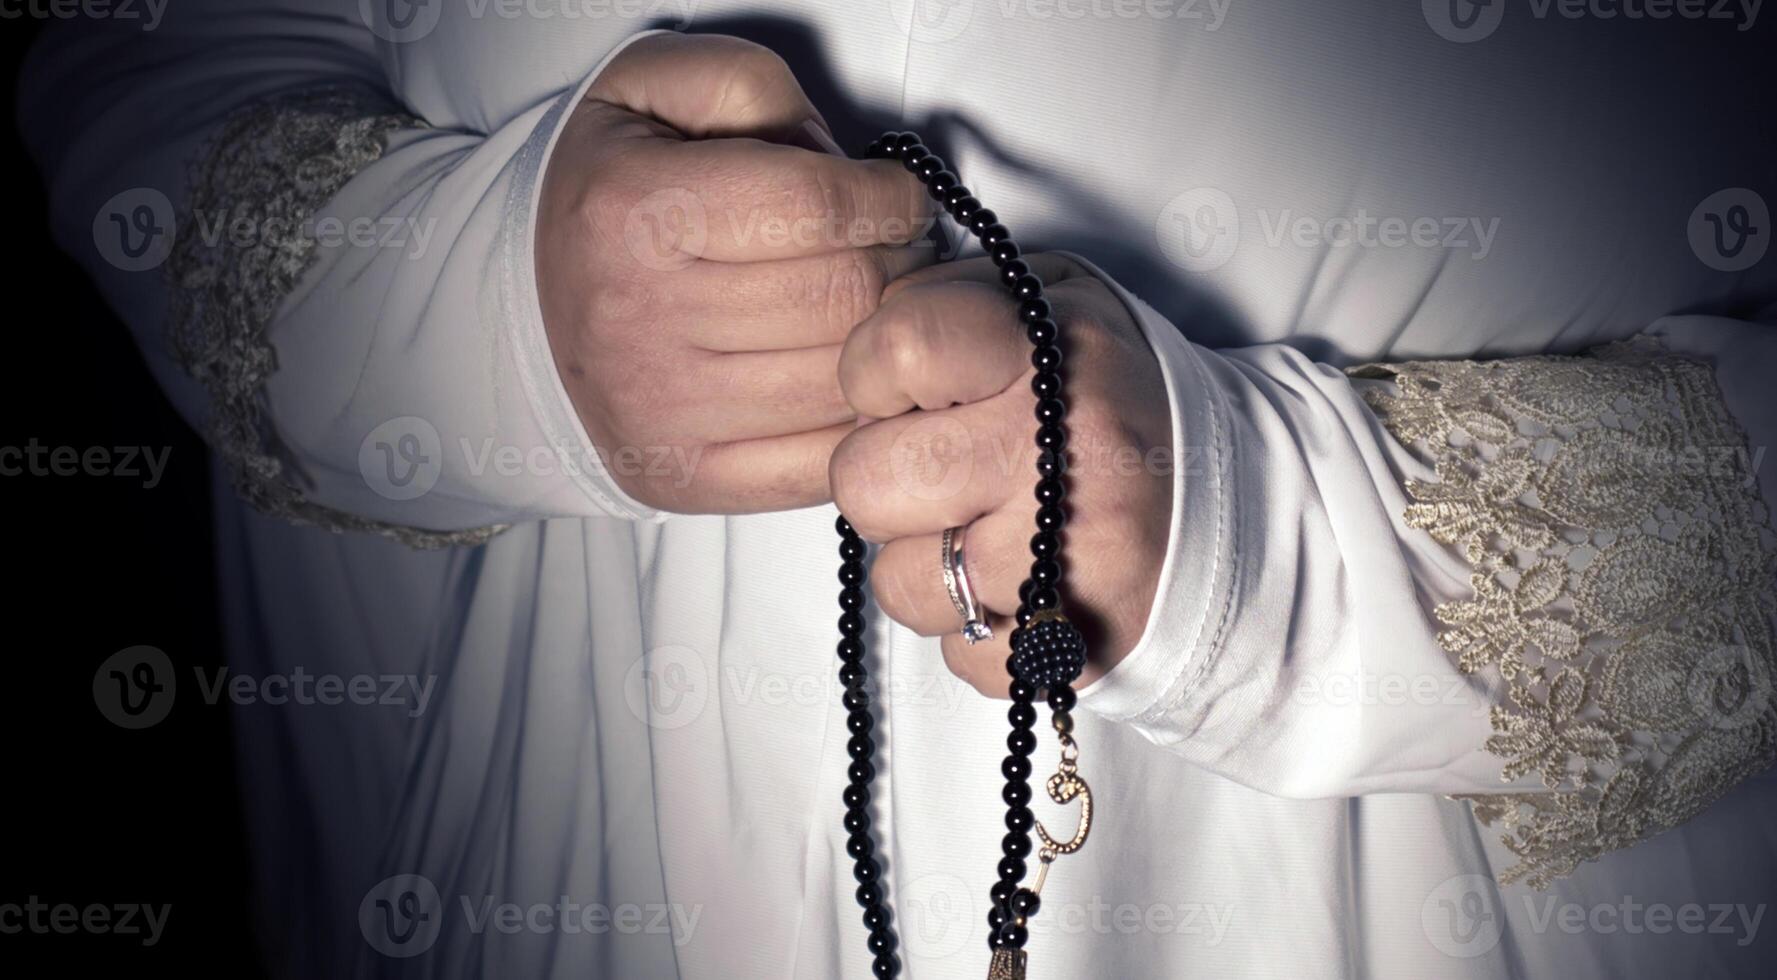 religieus moslim vrouw in gebed kleding foto